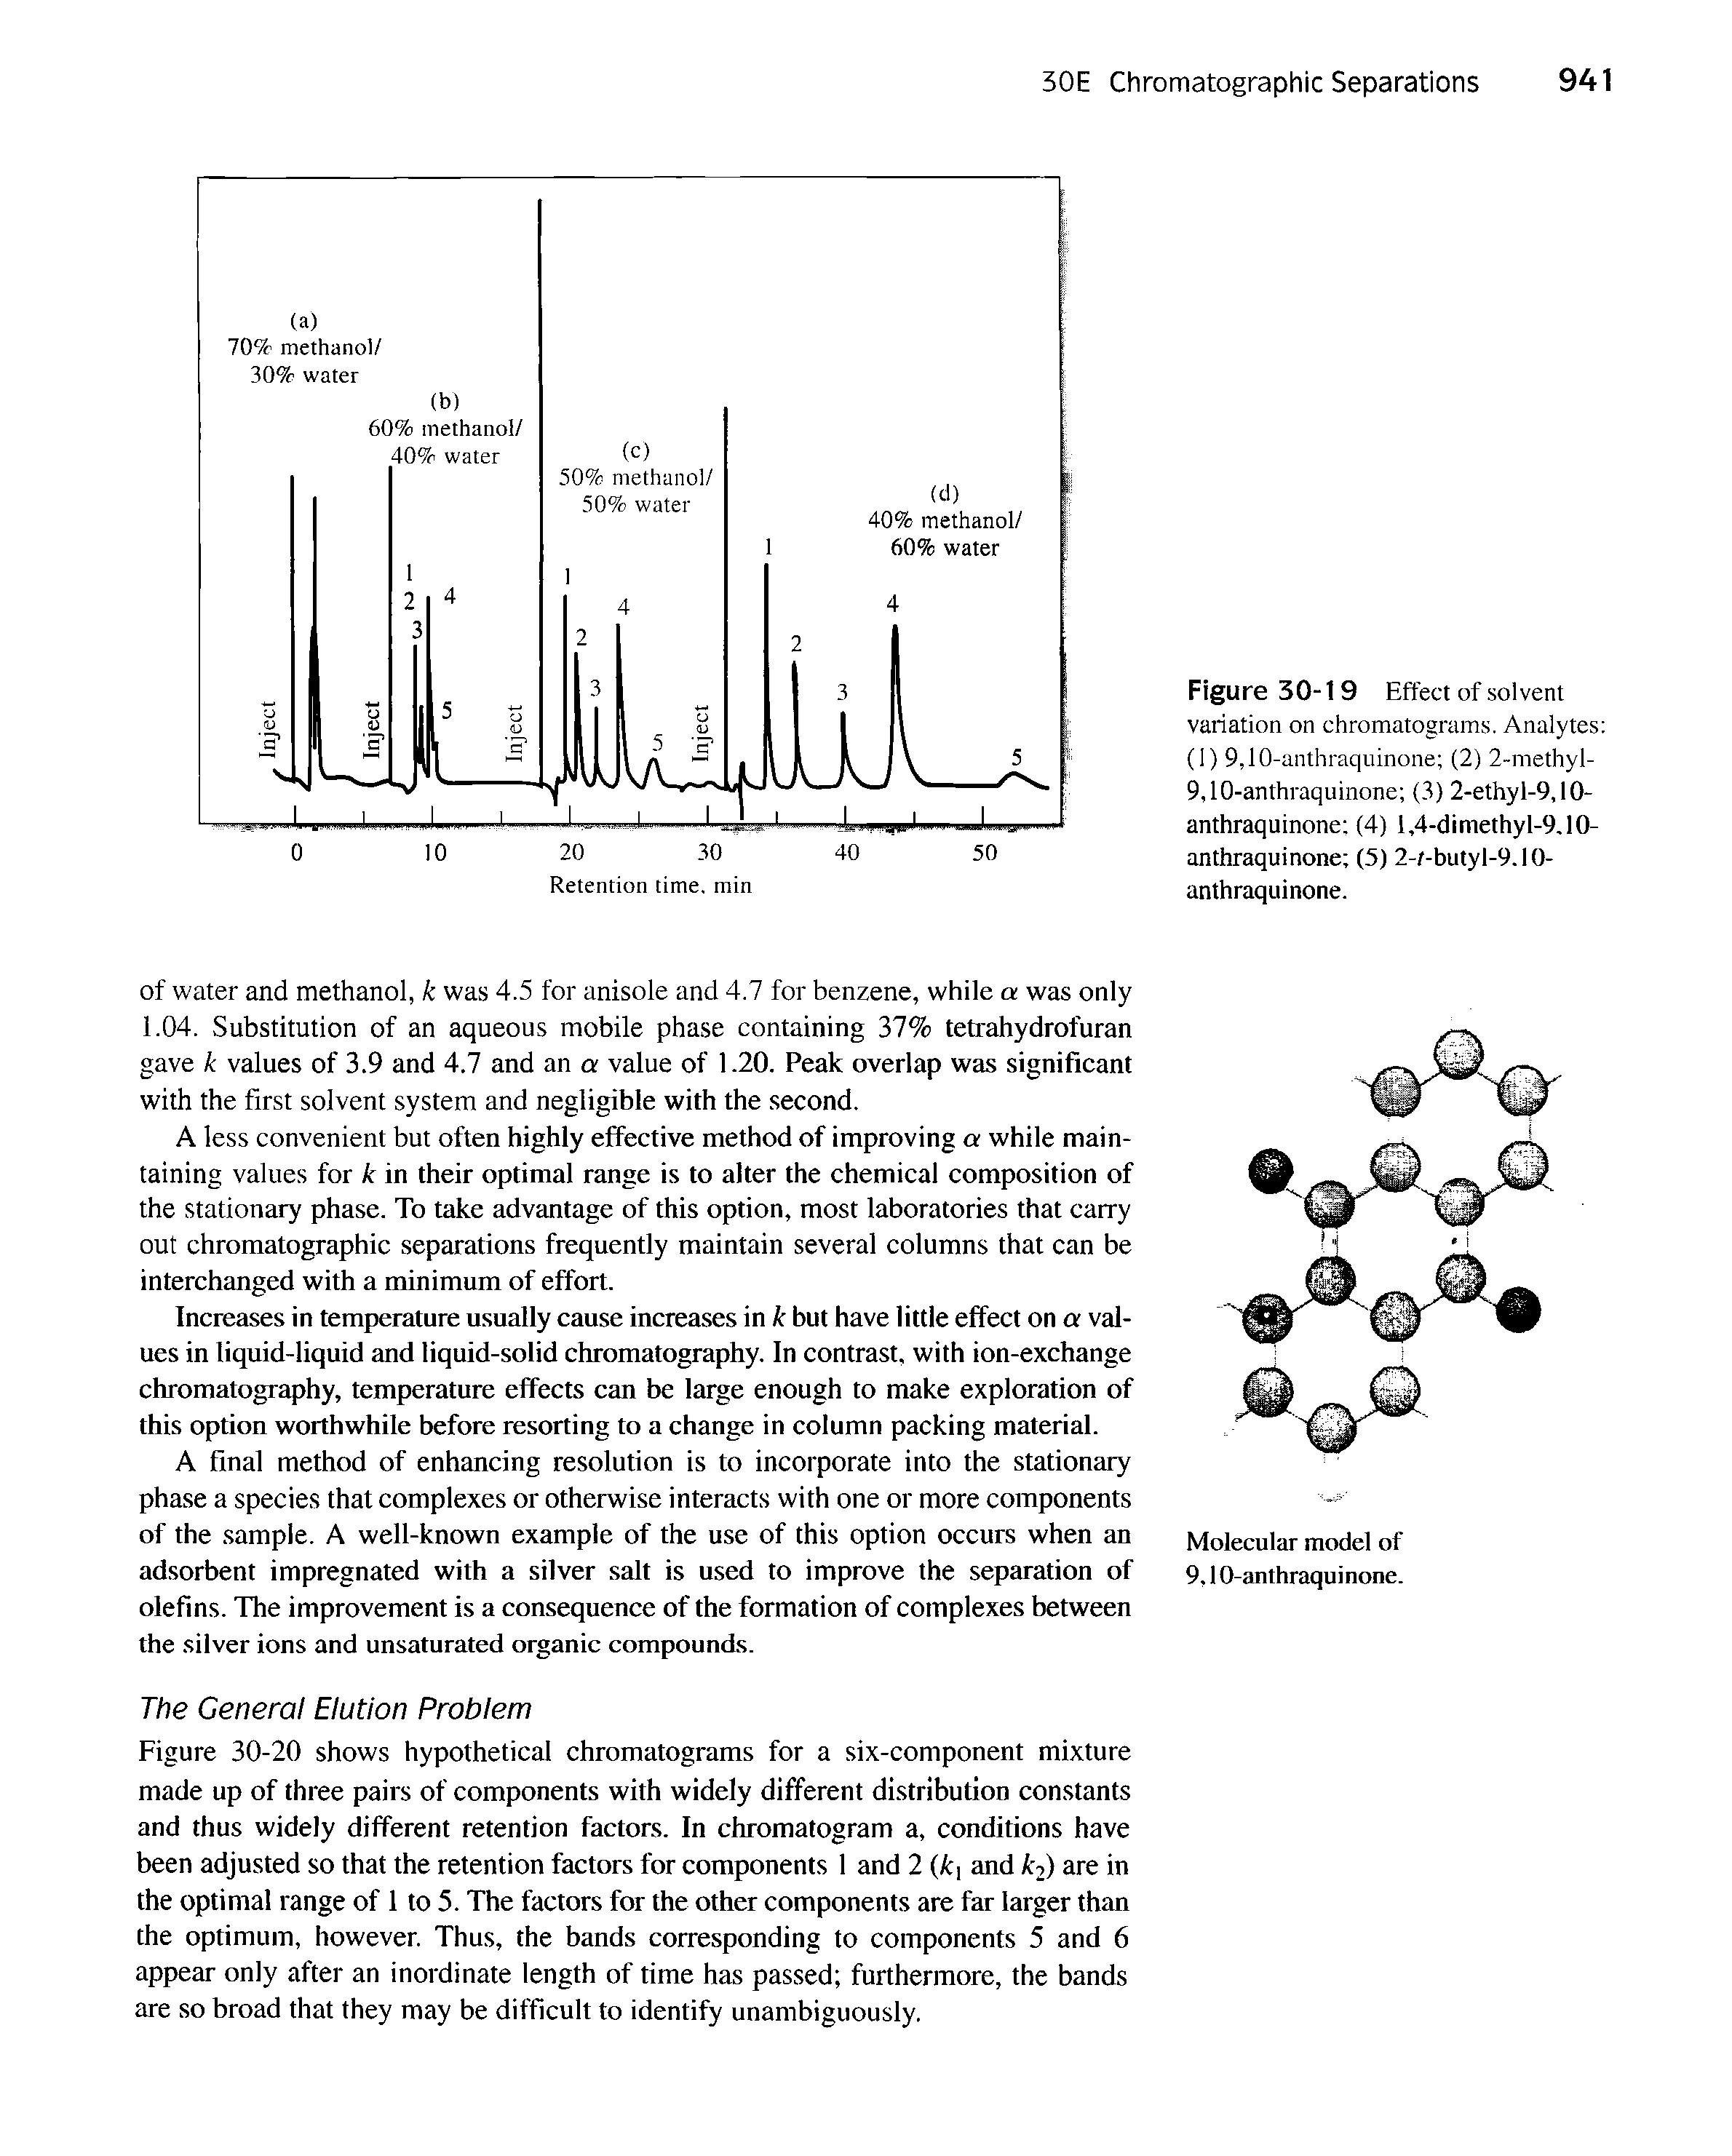 Figure 30-19 Effect of solvent variation on chromatograms. Analytes (1) 9,10-anthraquinone (2) 2-methyl-9,10-anthraquinone (3) 2-ethyl-9,10-anthraquinone (4) l,4-dimethyl-9,10-anthraquinone (5) 2-t-butyl-9.10-anthraquinone.